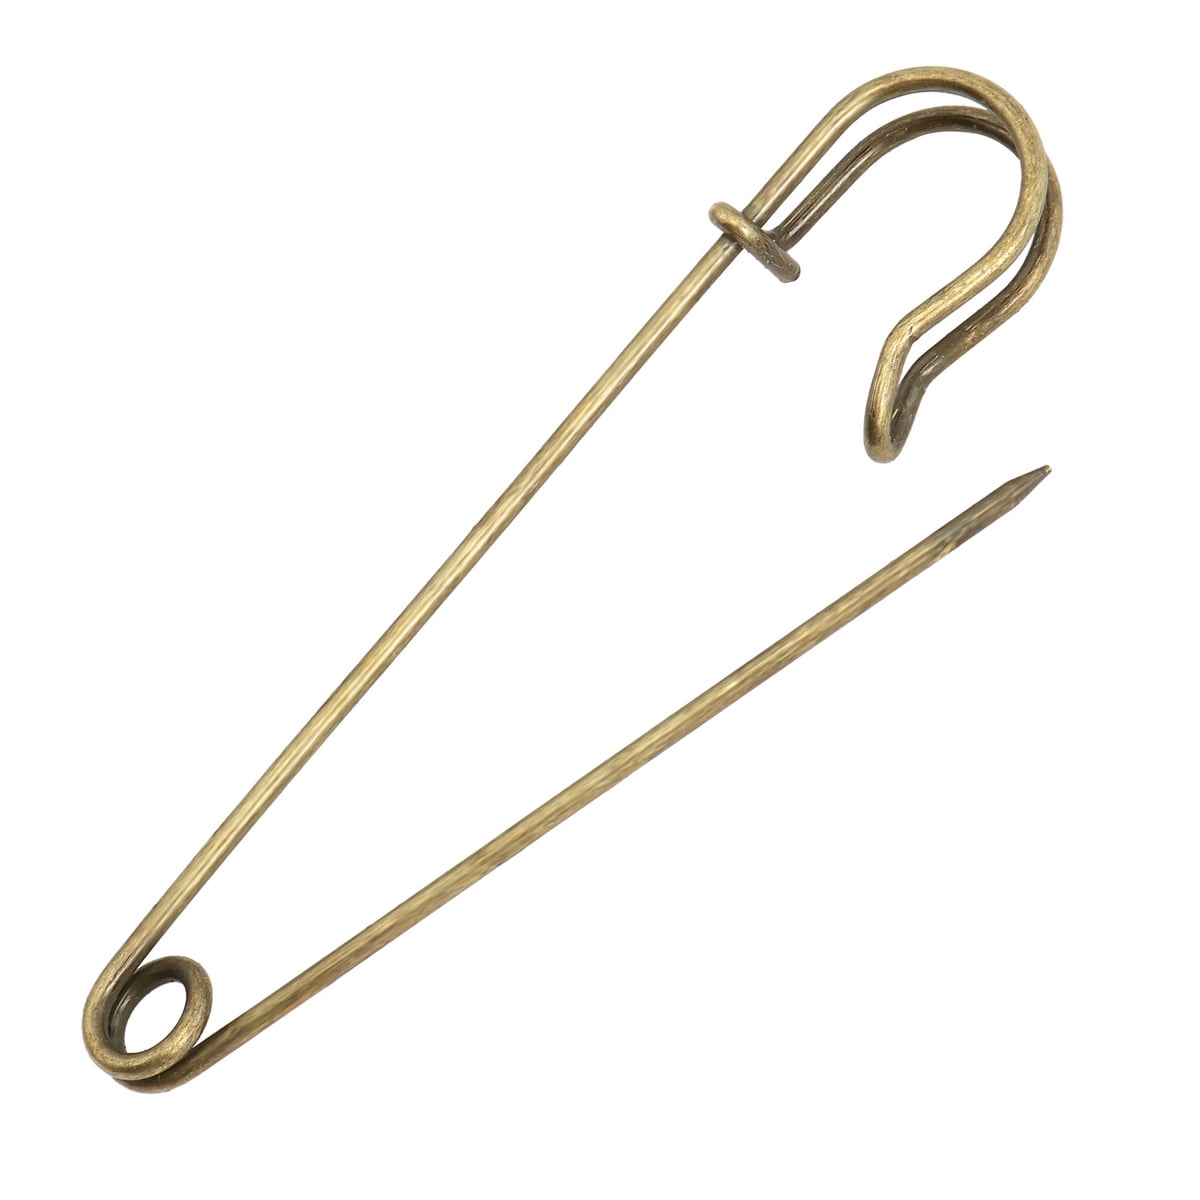 Prym Safety pins assorted 19-23-27mm gold - 5x30pcs